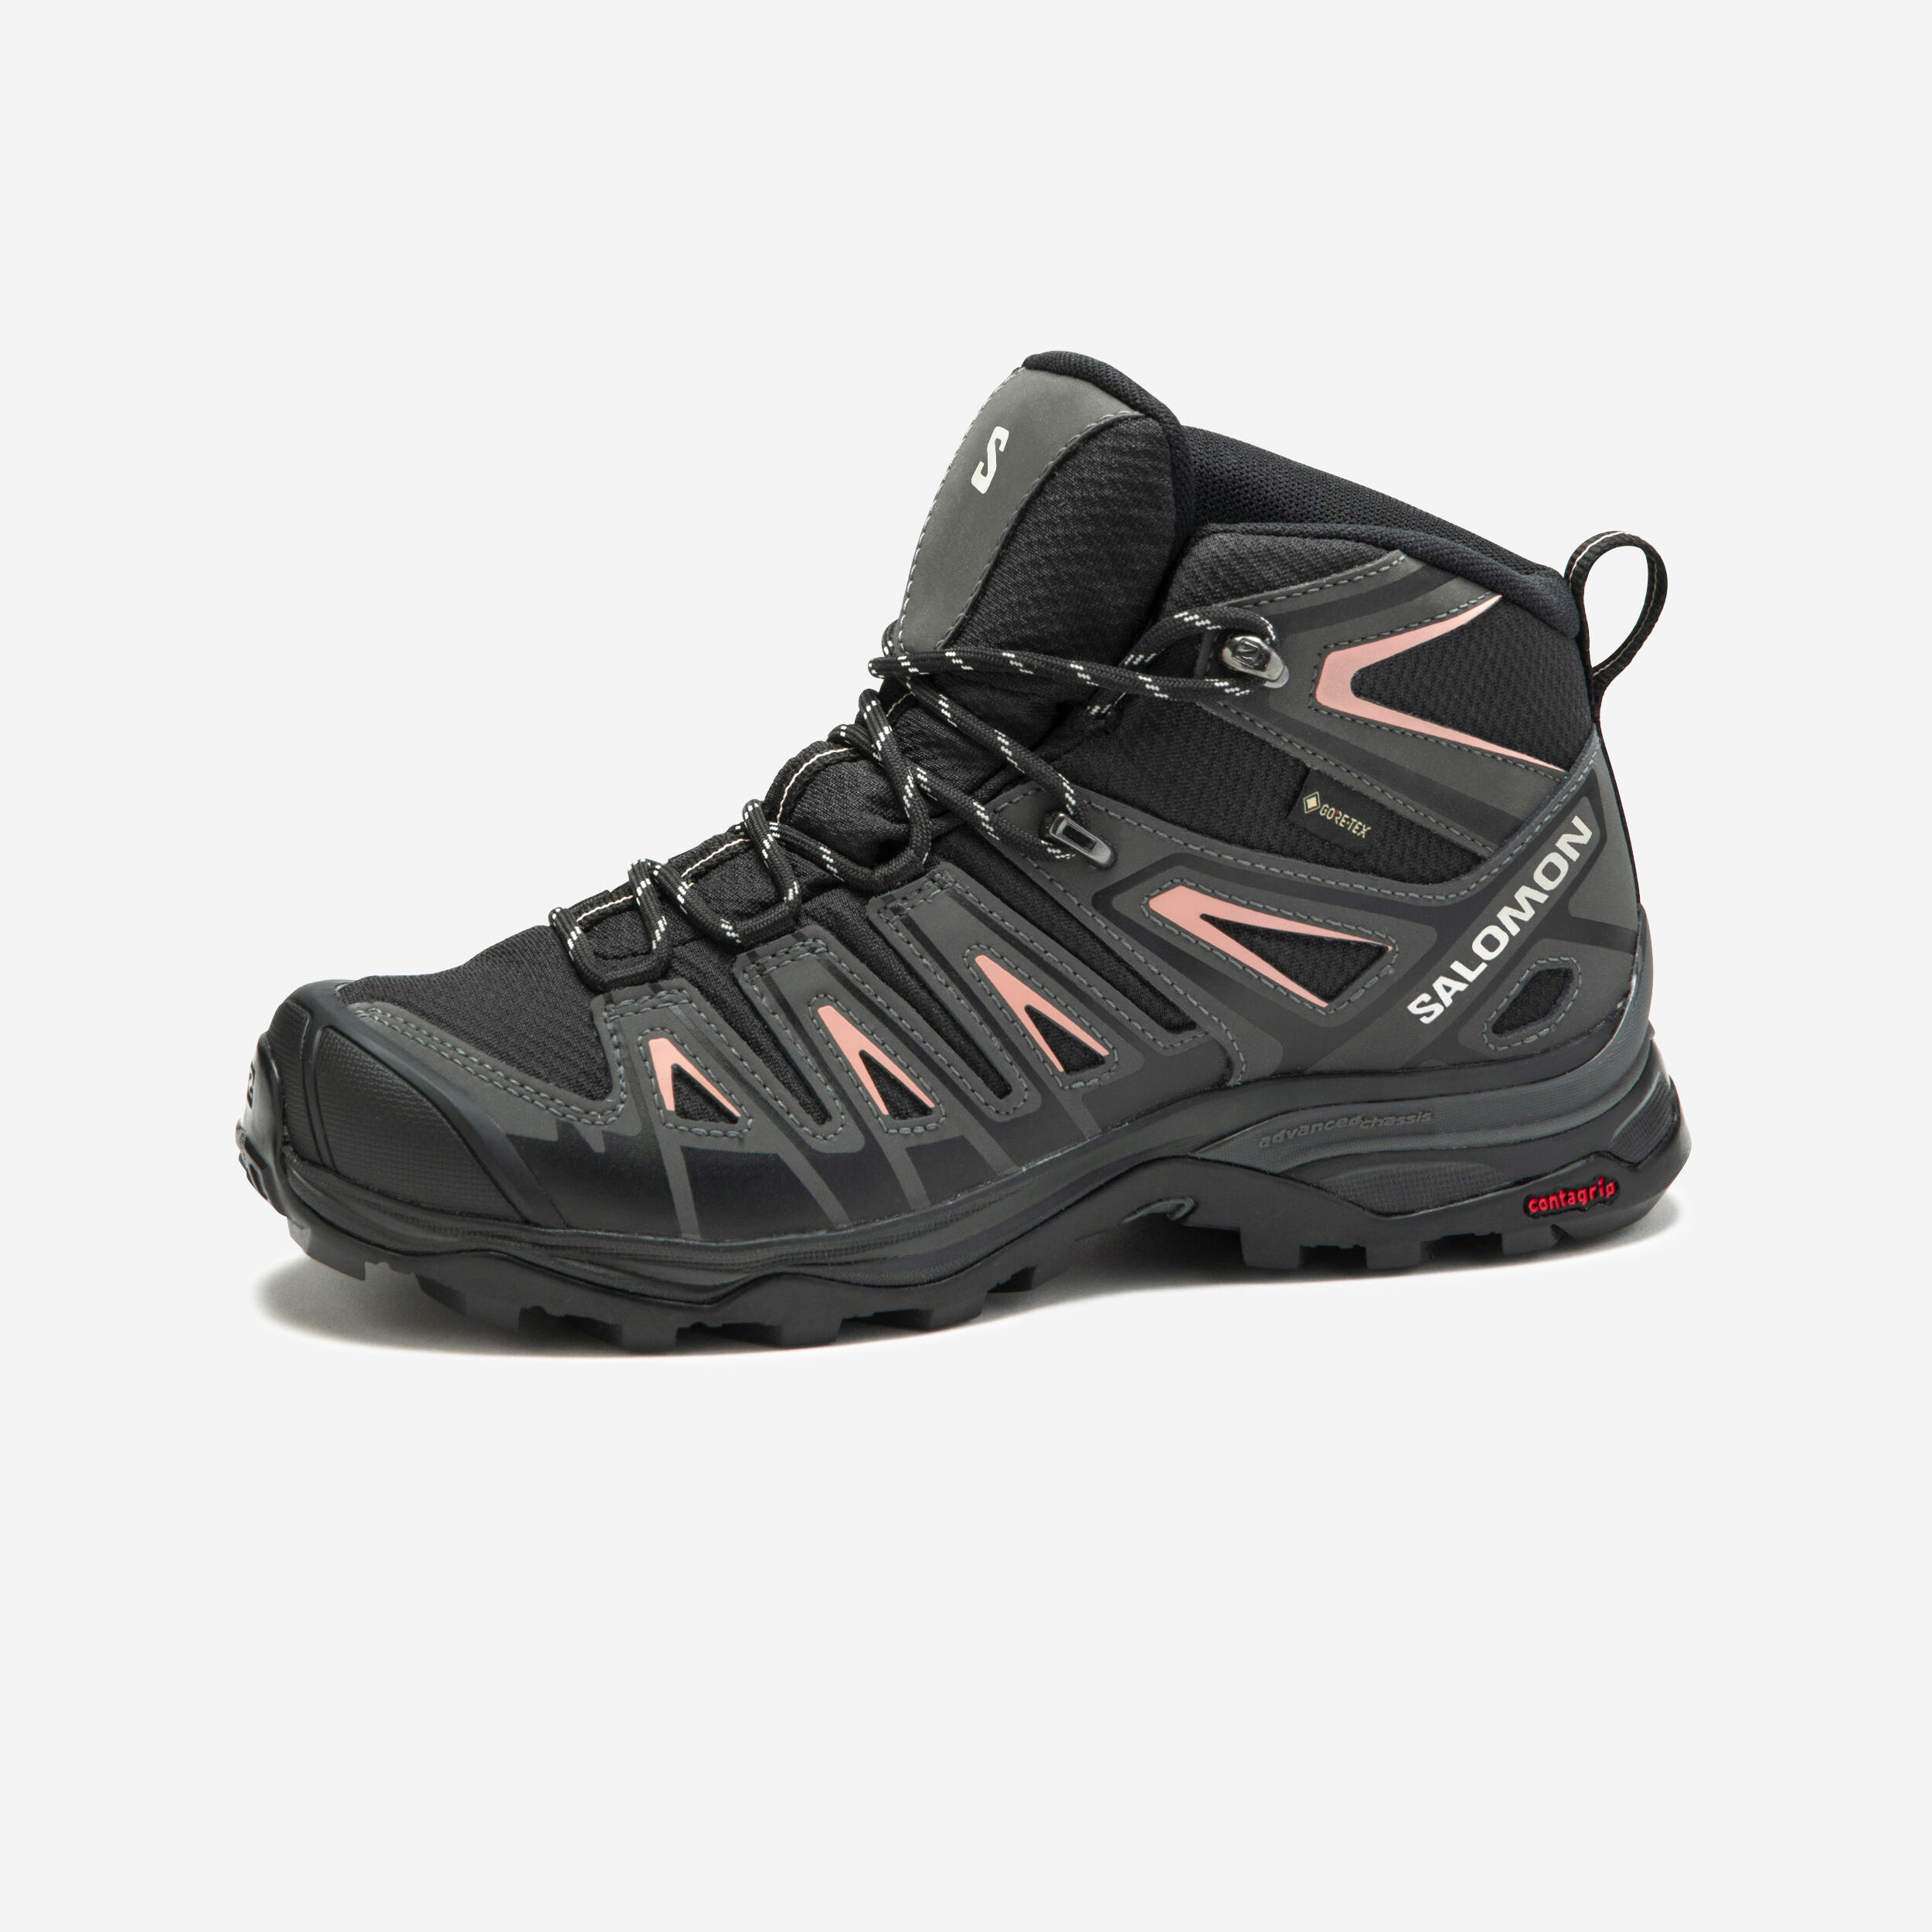 Salomon Mountain Hiking Shoes - X Ultra Pioneer Goretex Mid Women